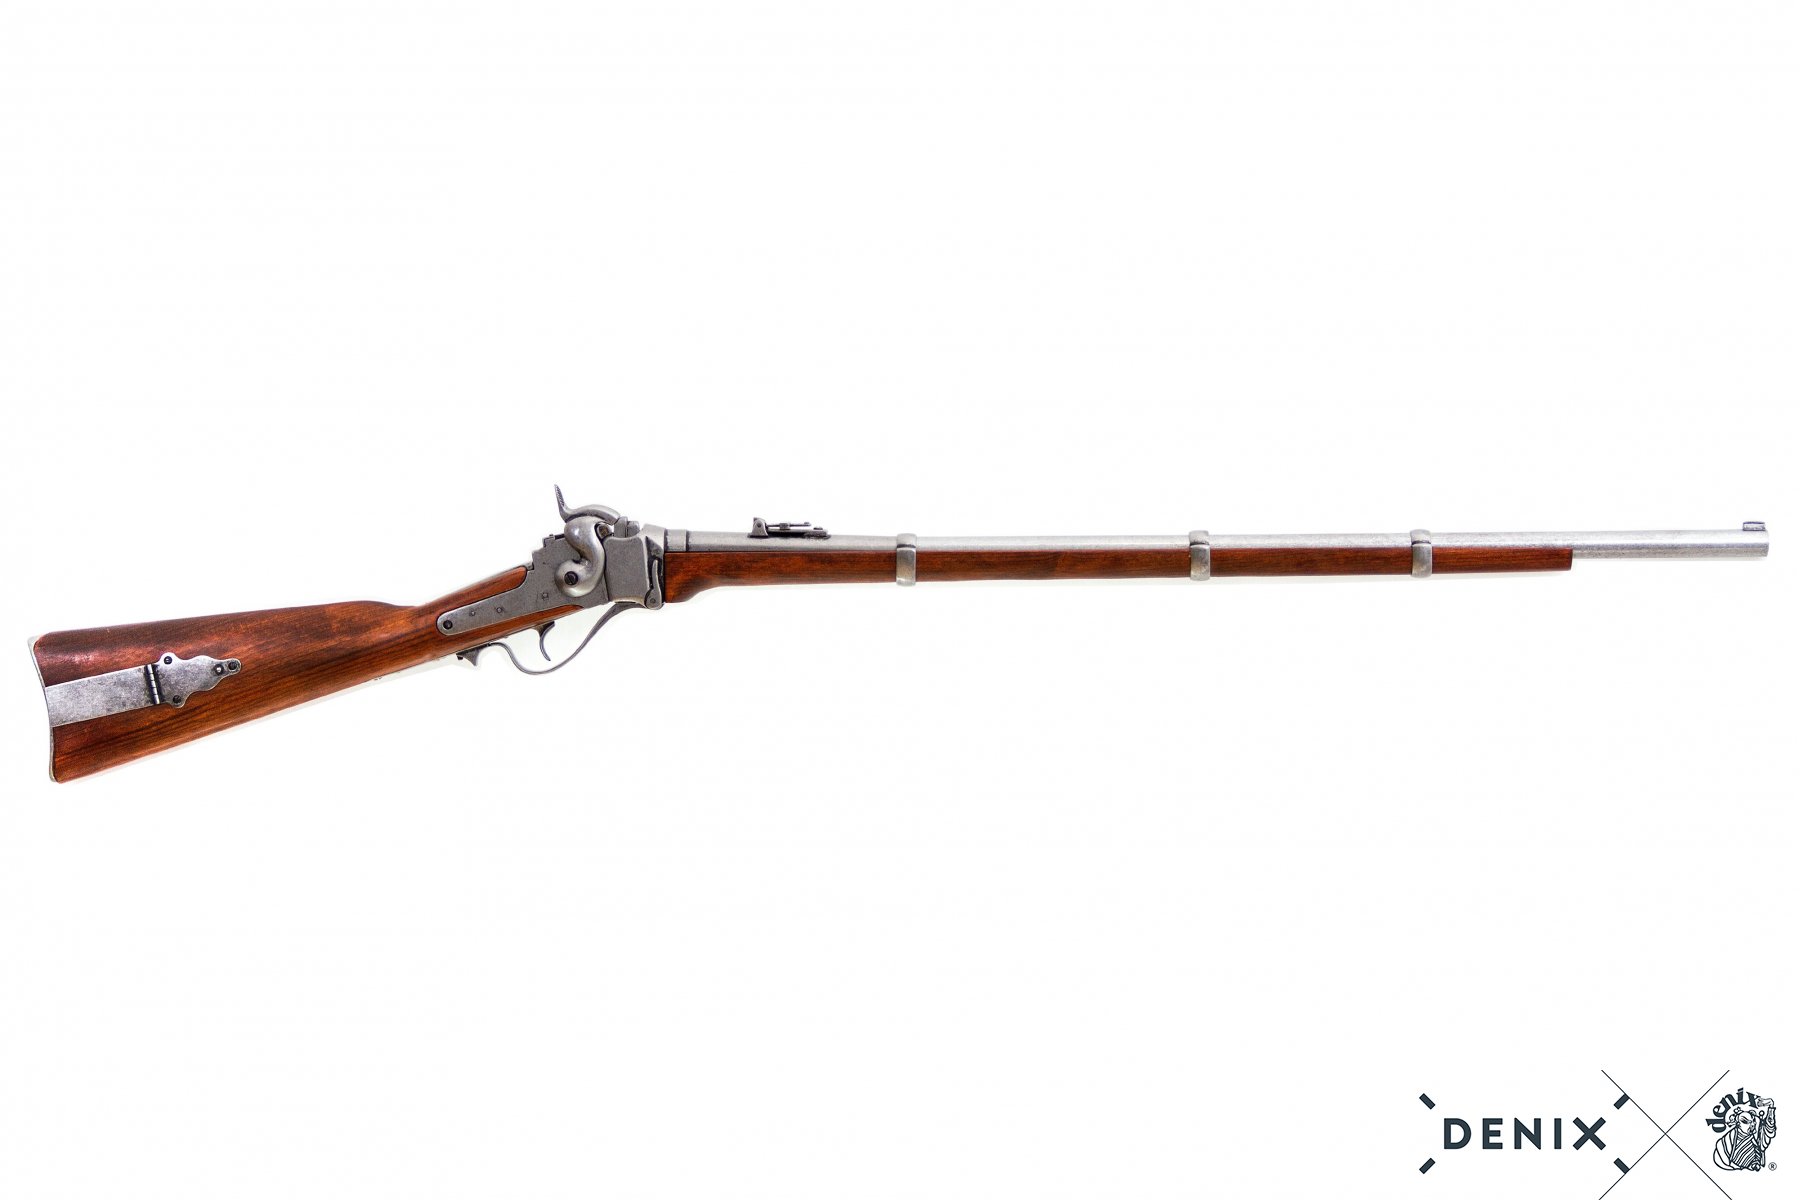 Americ. Sharps carbine, USA 1859, silver